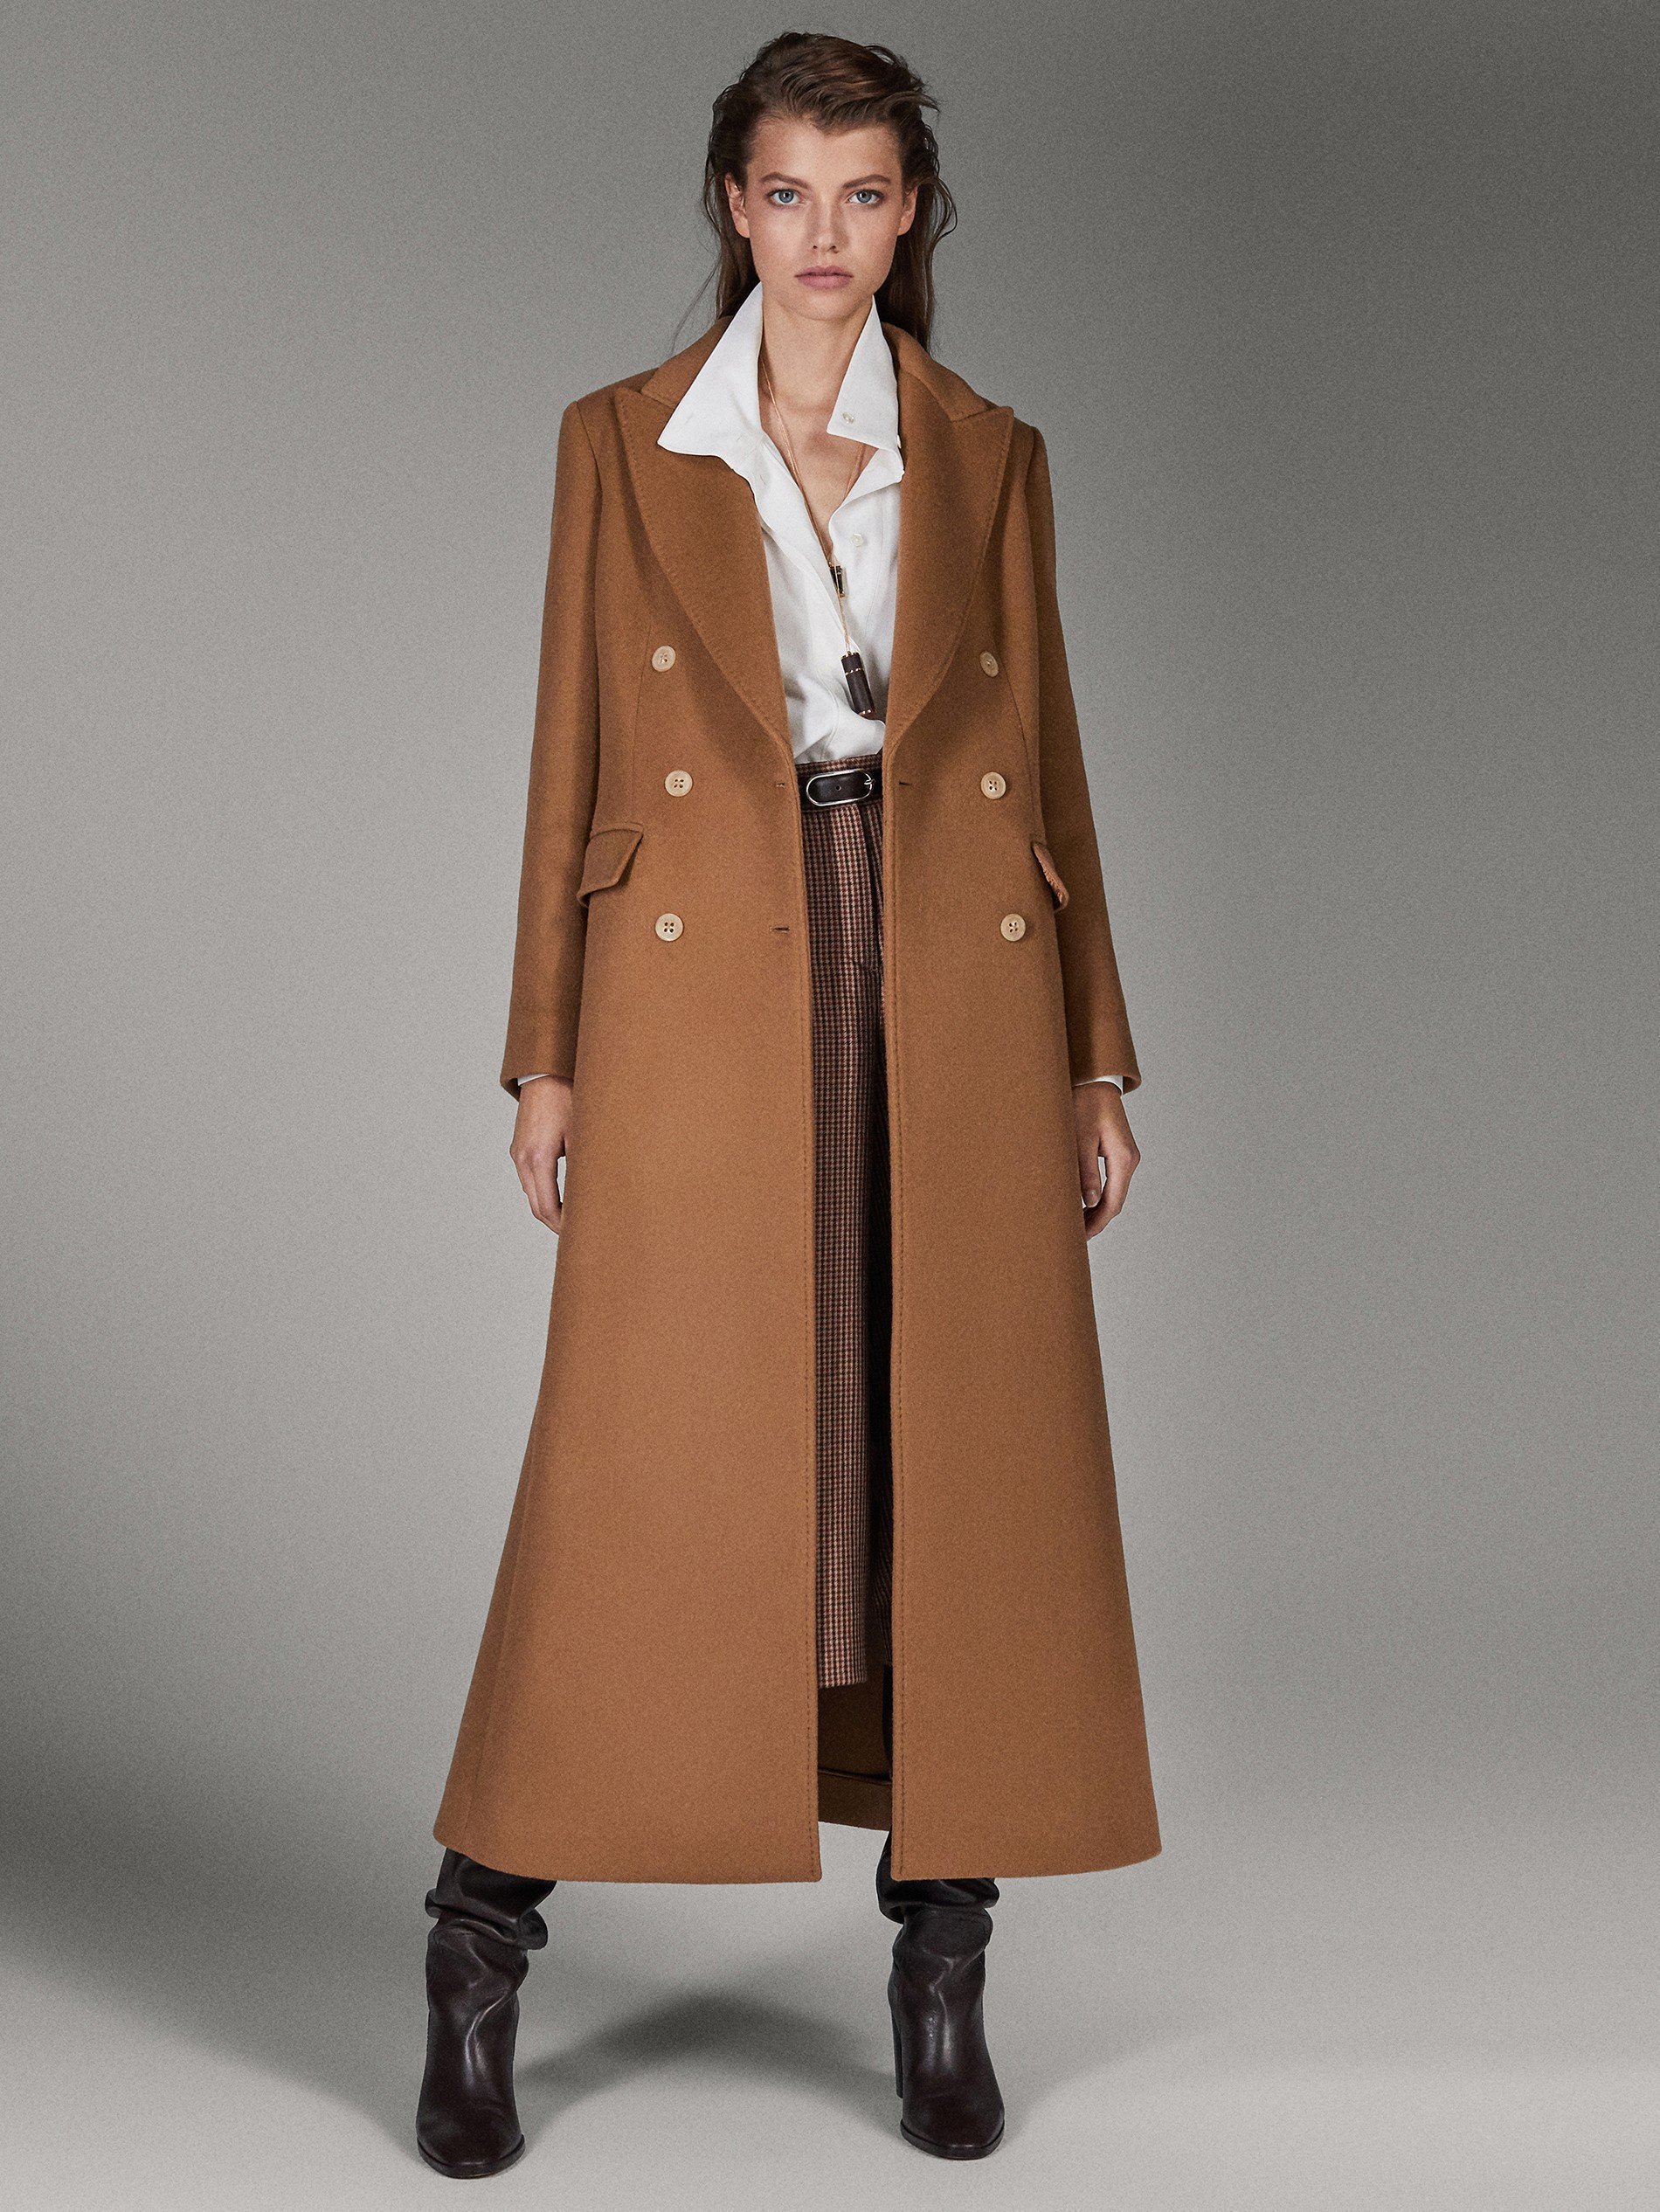 Massimo Dutti Kate Middleton coat